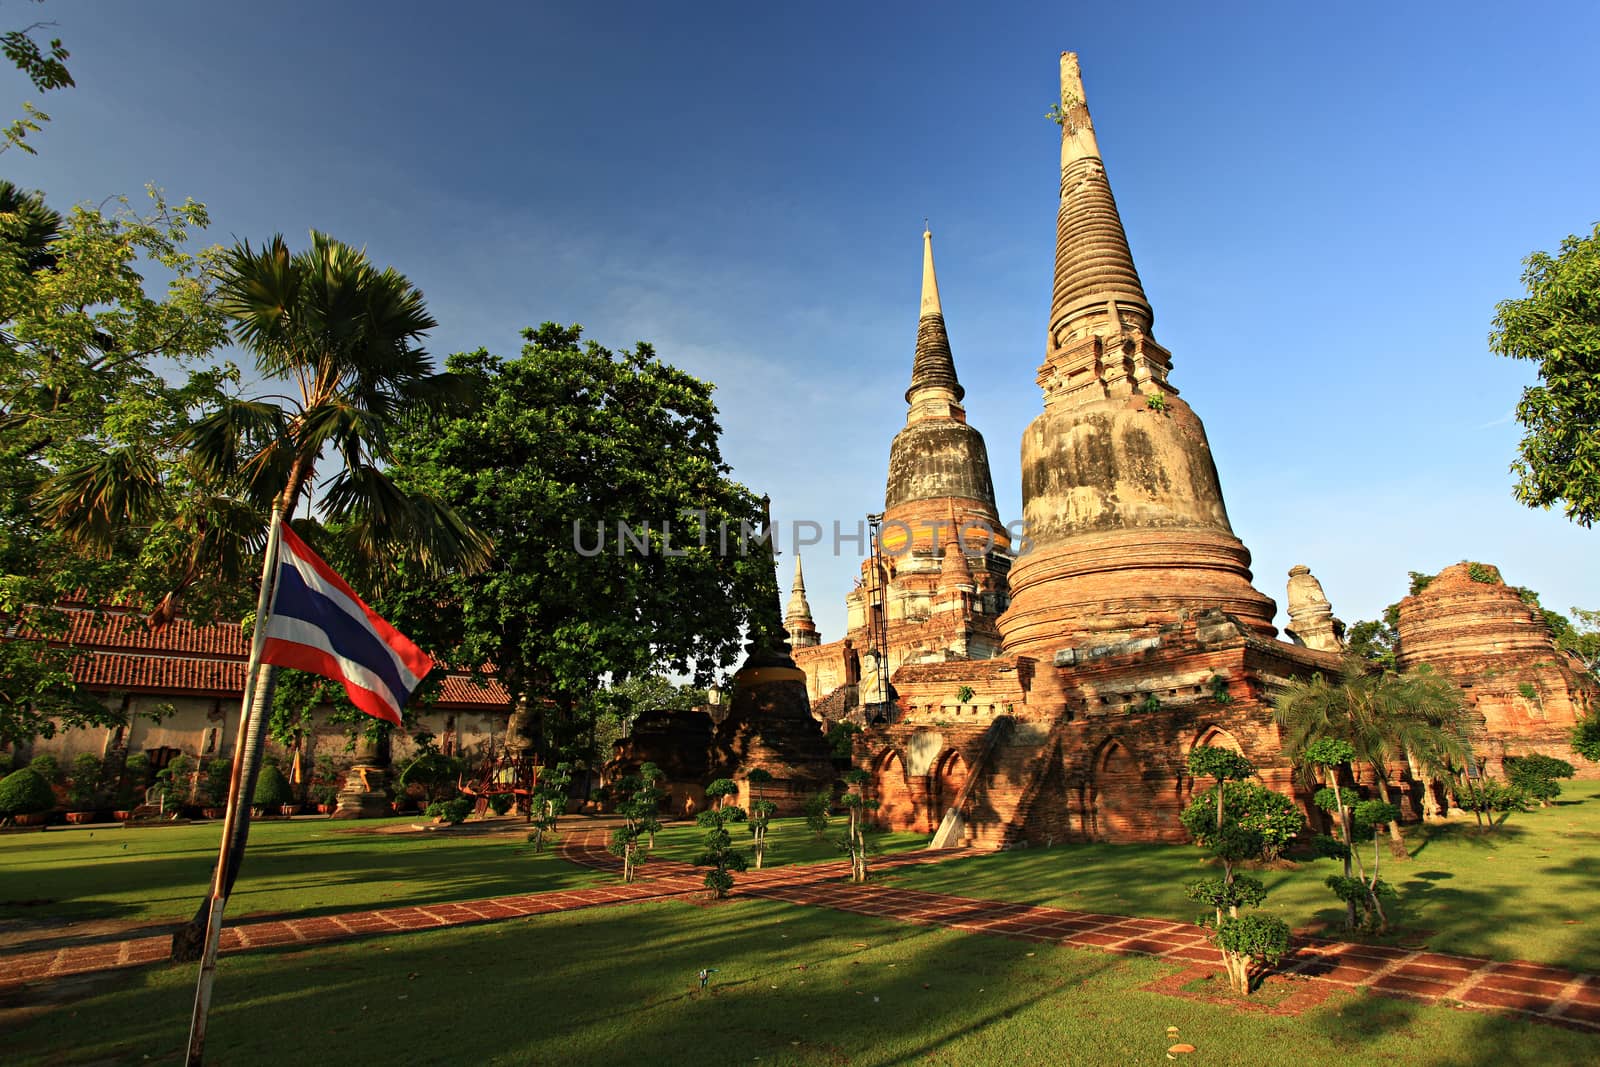 Phra Chedi Chaimongkhon, an ancient chedi pagoda at Wat Yai Chai Mongkhon Temple, a popular tourist destination in Phra Nakhon Si Ayutthaya province, Thailand